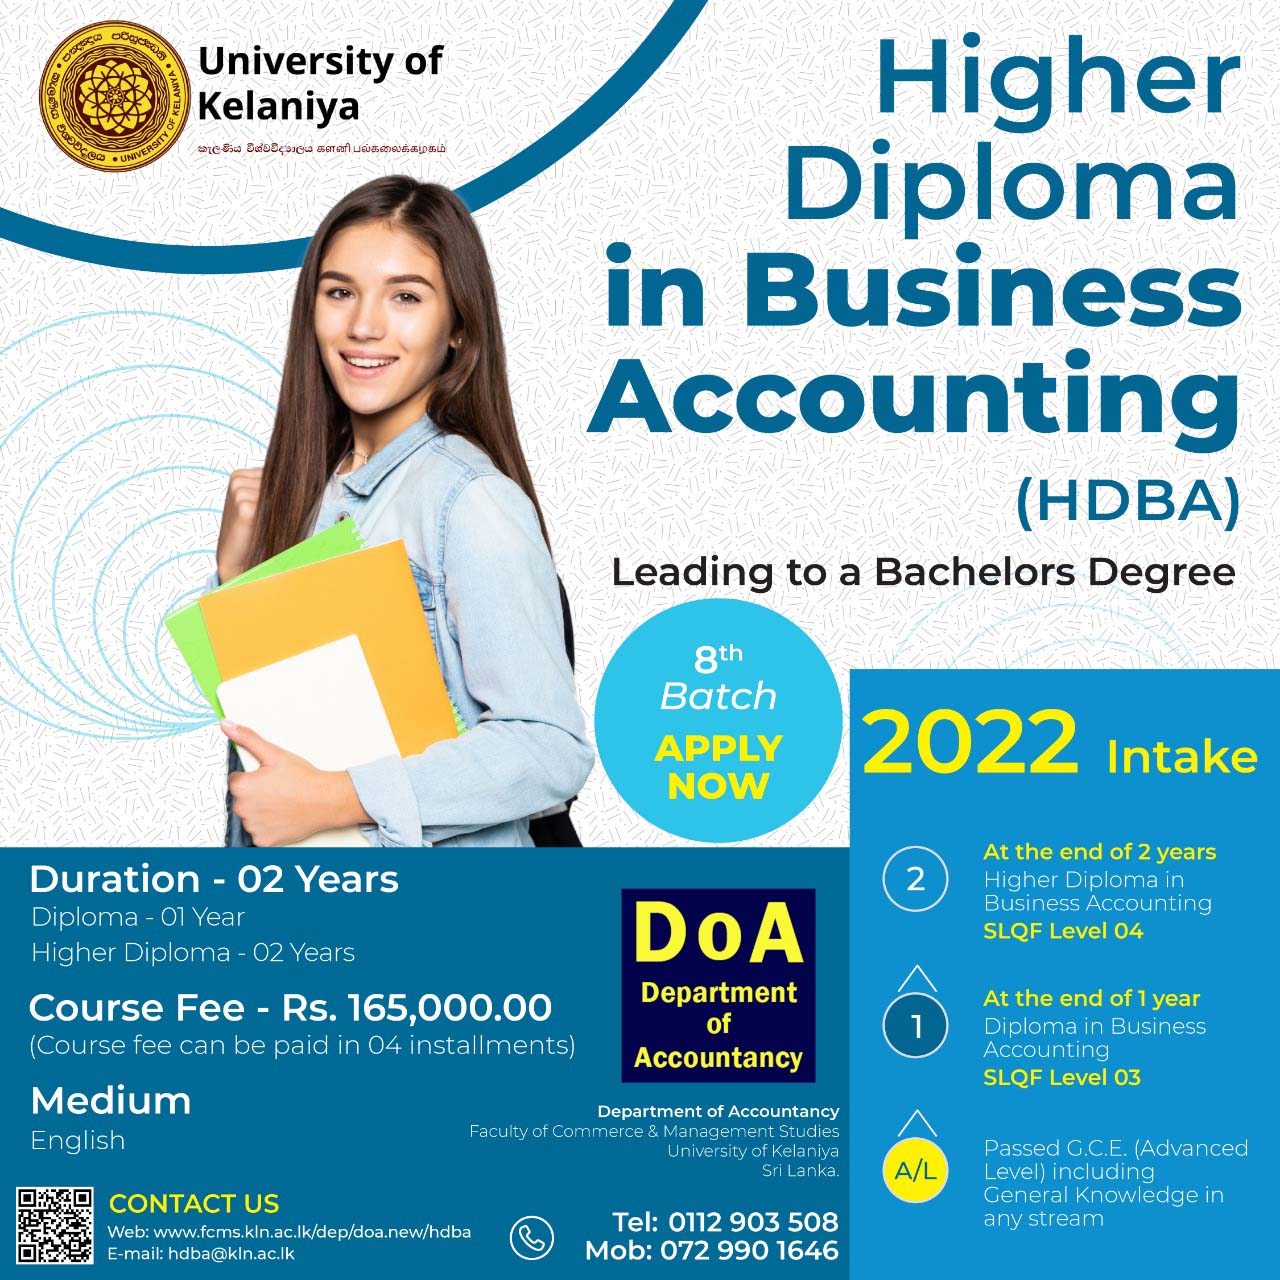 Higher Diploma in Business Accounting (HDBA) 2022 - University of Kelaniya